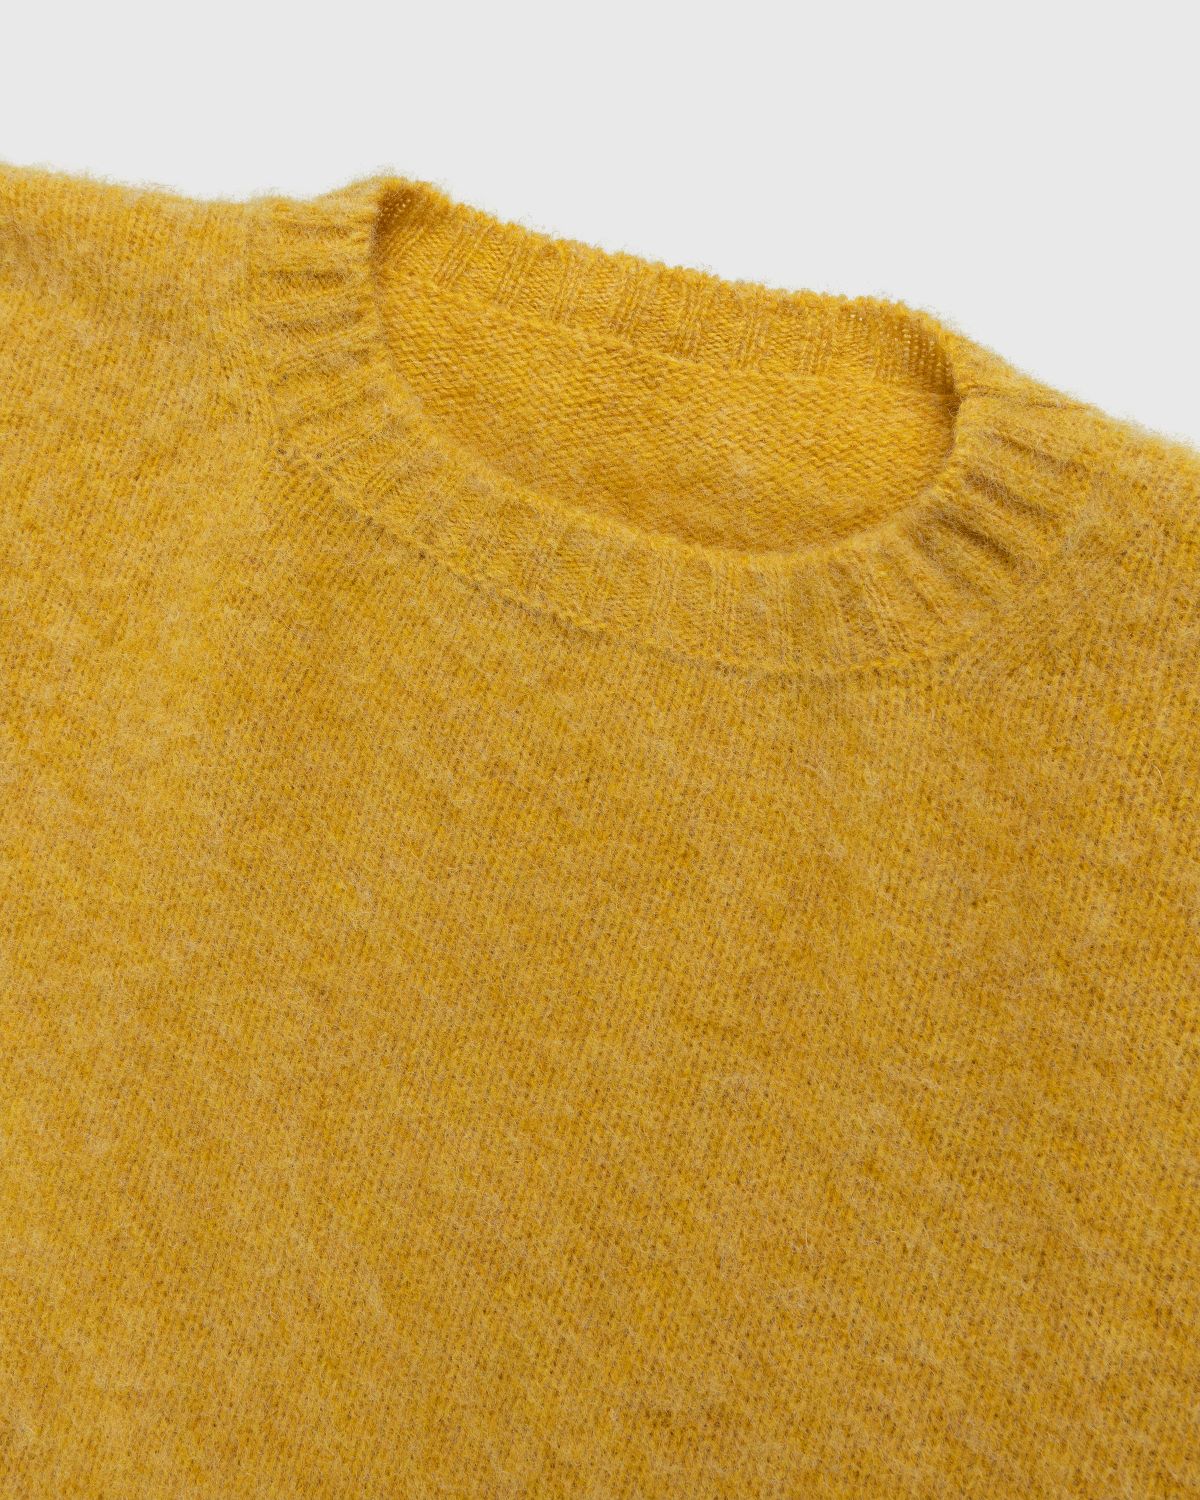 J. Press x Highsnobiety – Shaggy Dog Solid Sweater Yellow - Crewnecks - Yellow - Image 3